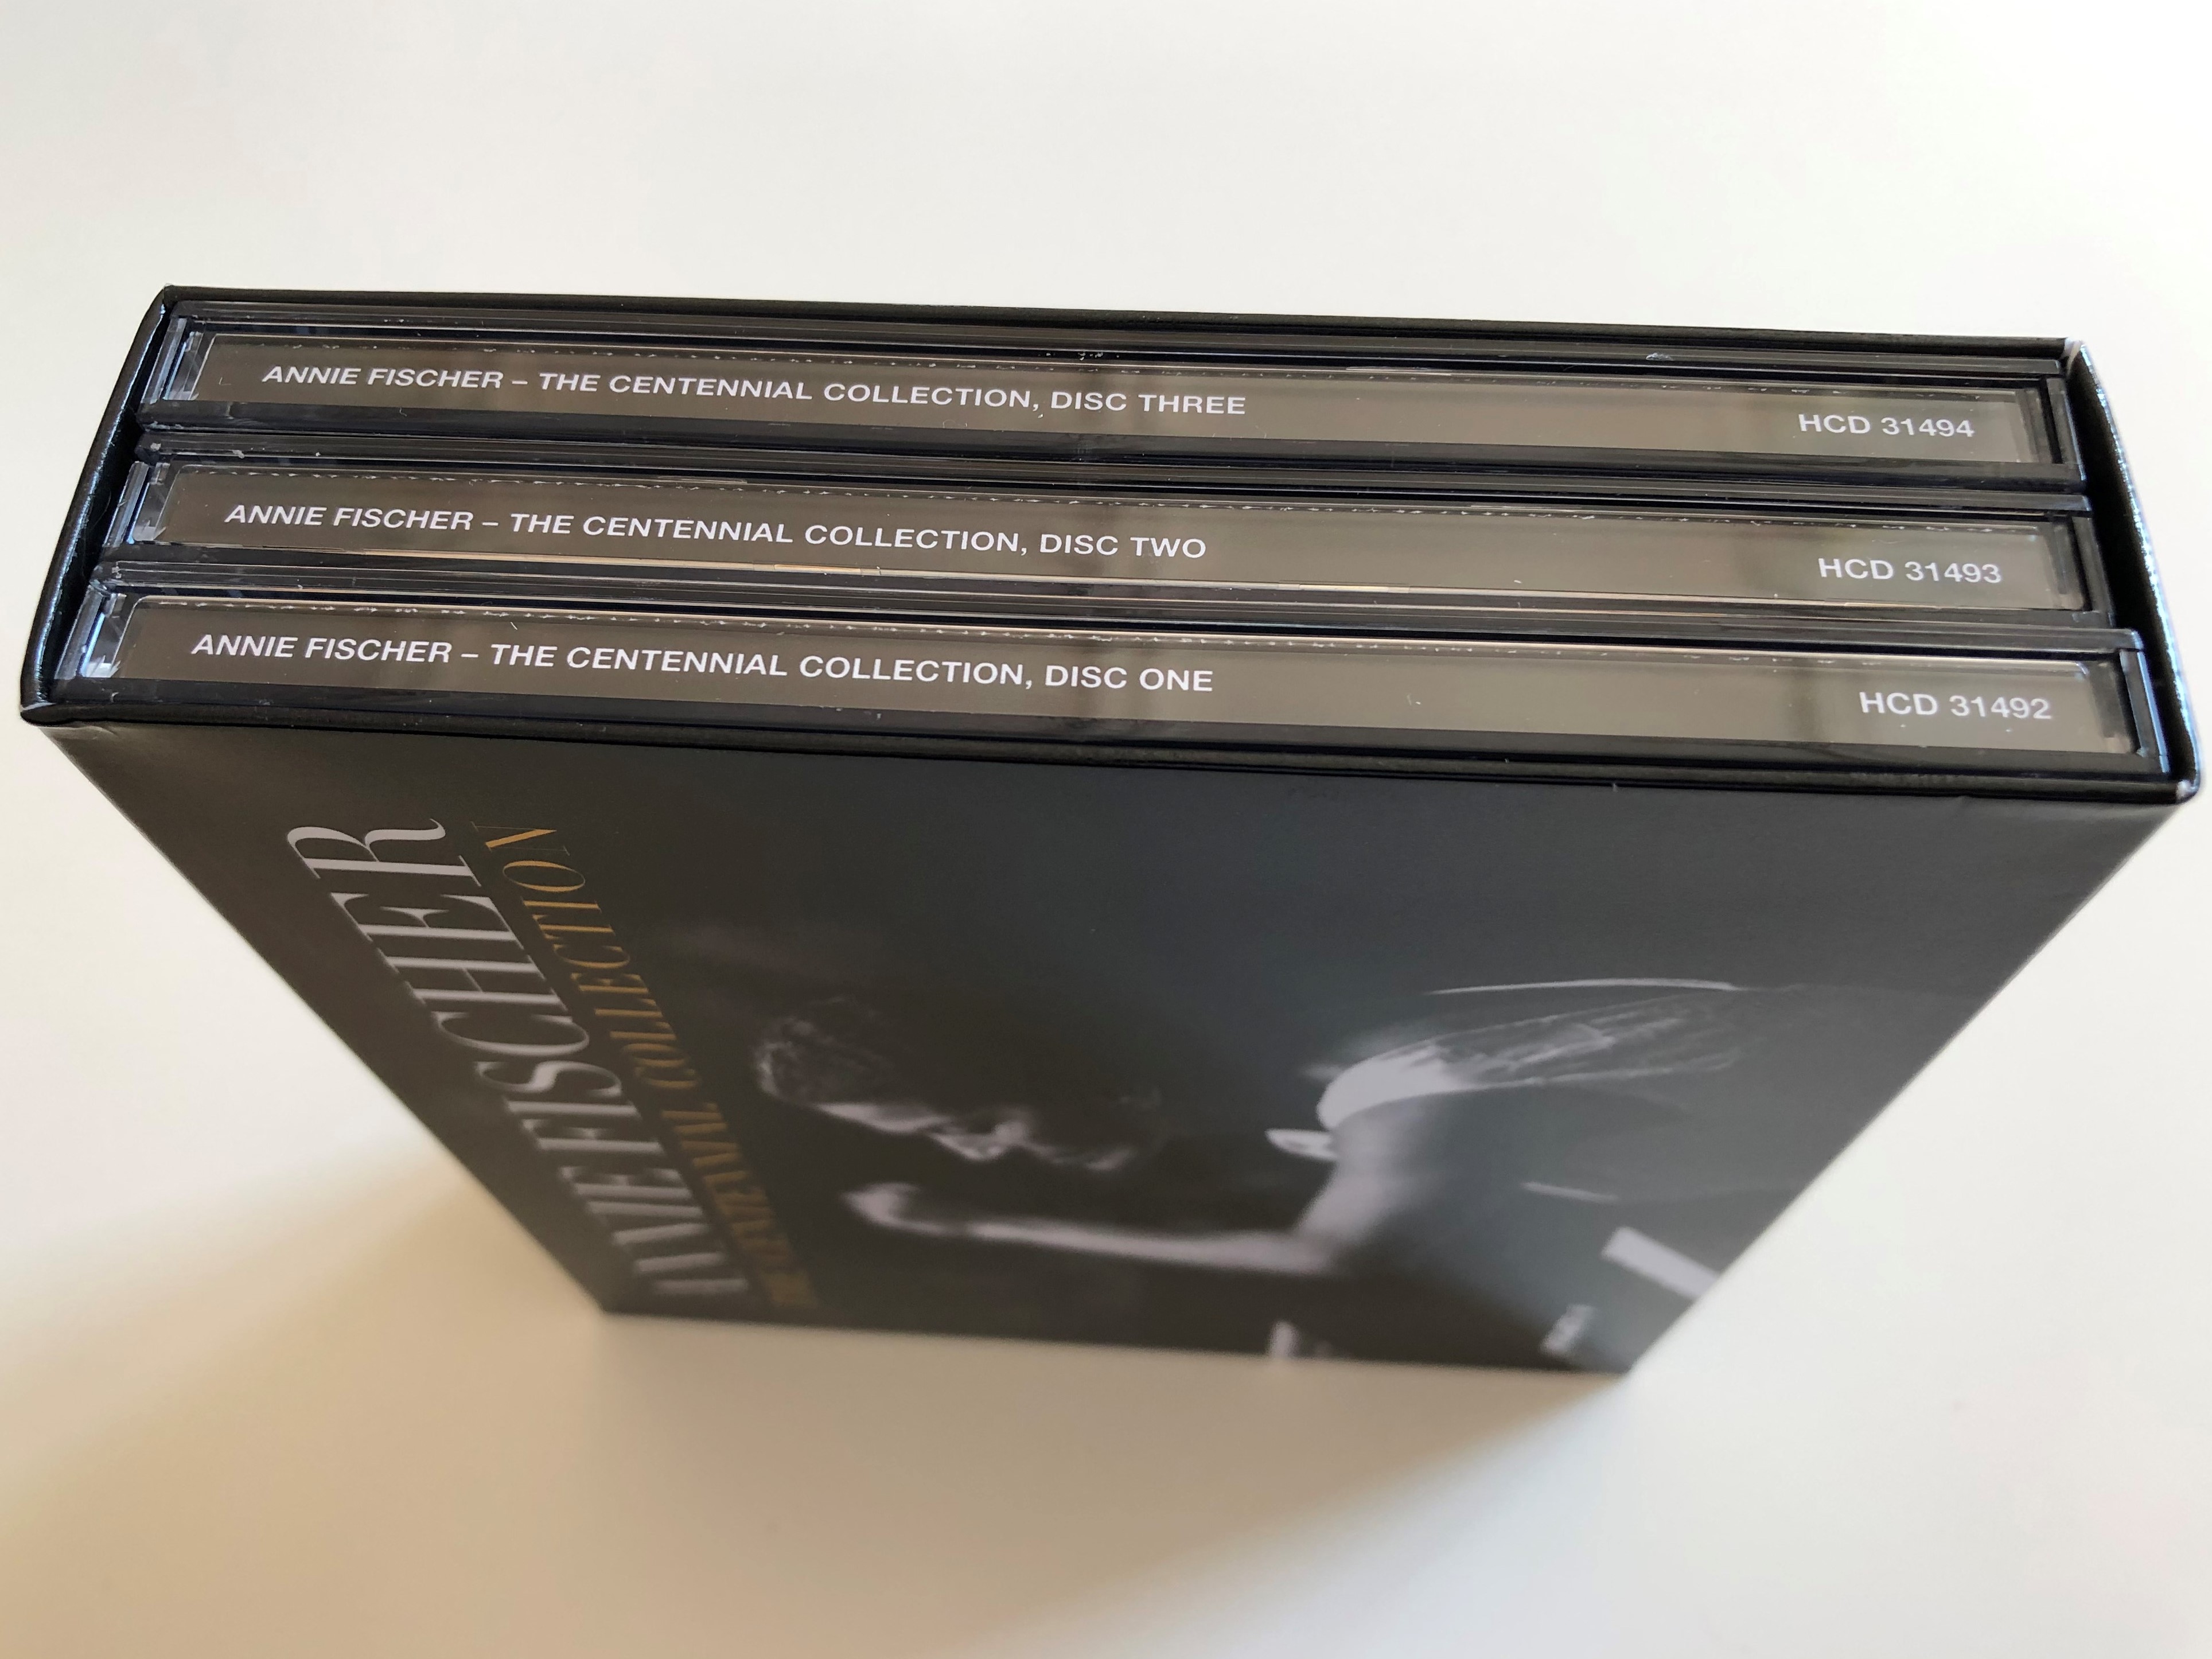 annie-fischer-the-centennial-collection-audio-cd-set-of-3-discs-hungaroton-hcd-41011-3-.jpg